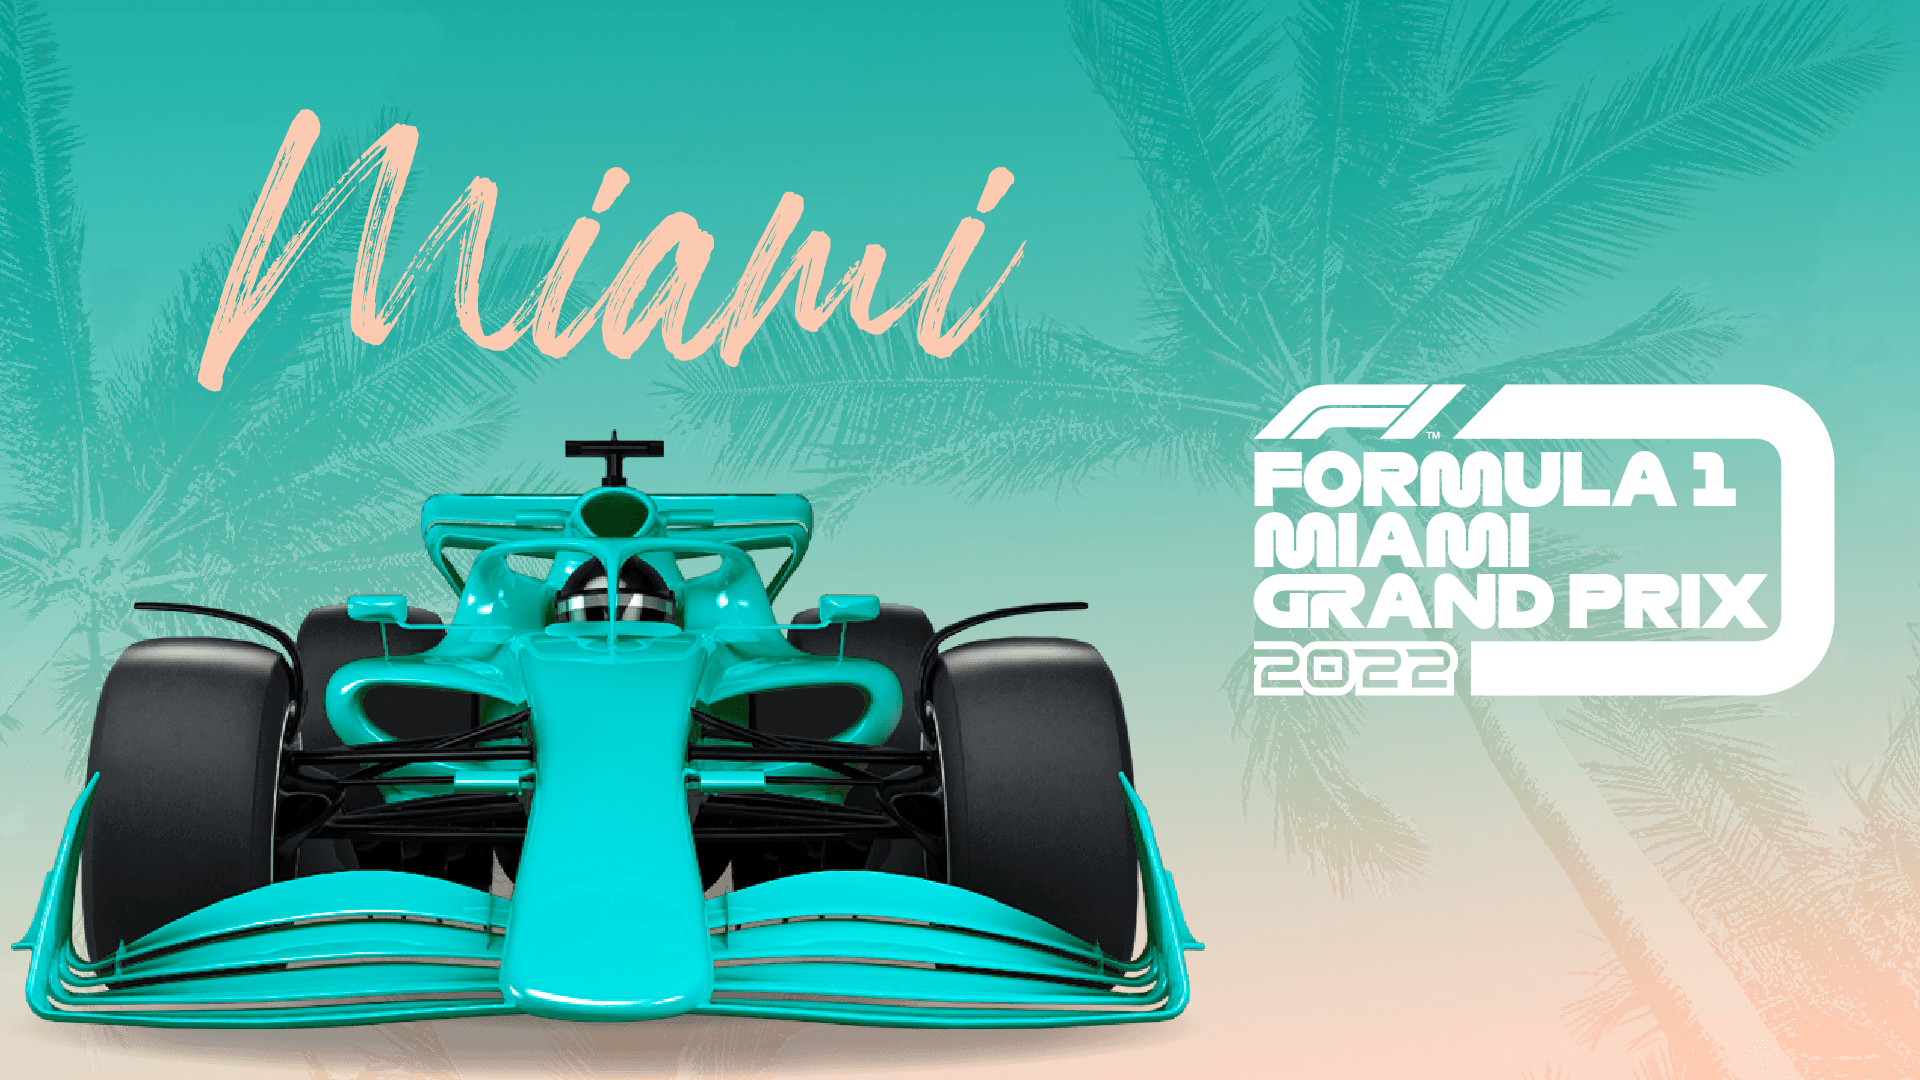 Crypto.com to title sponsor Miami's new F1 race